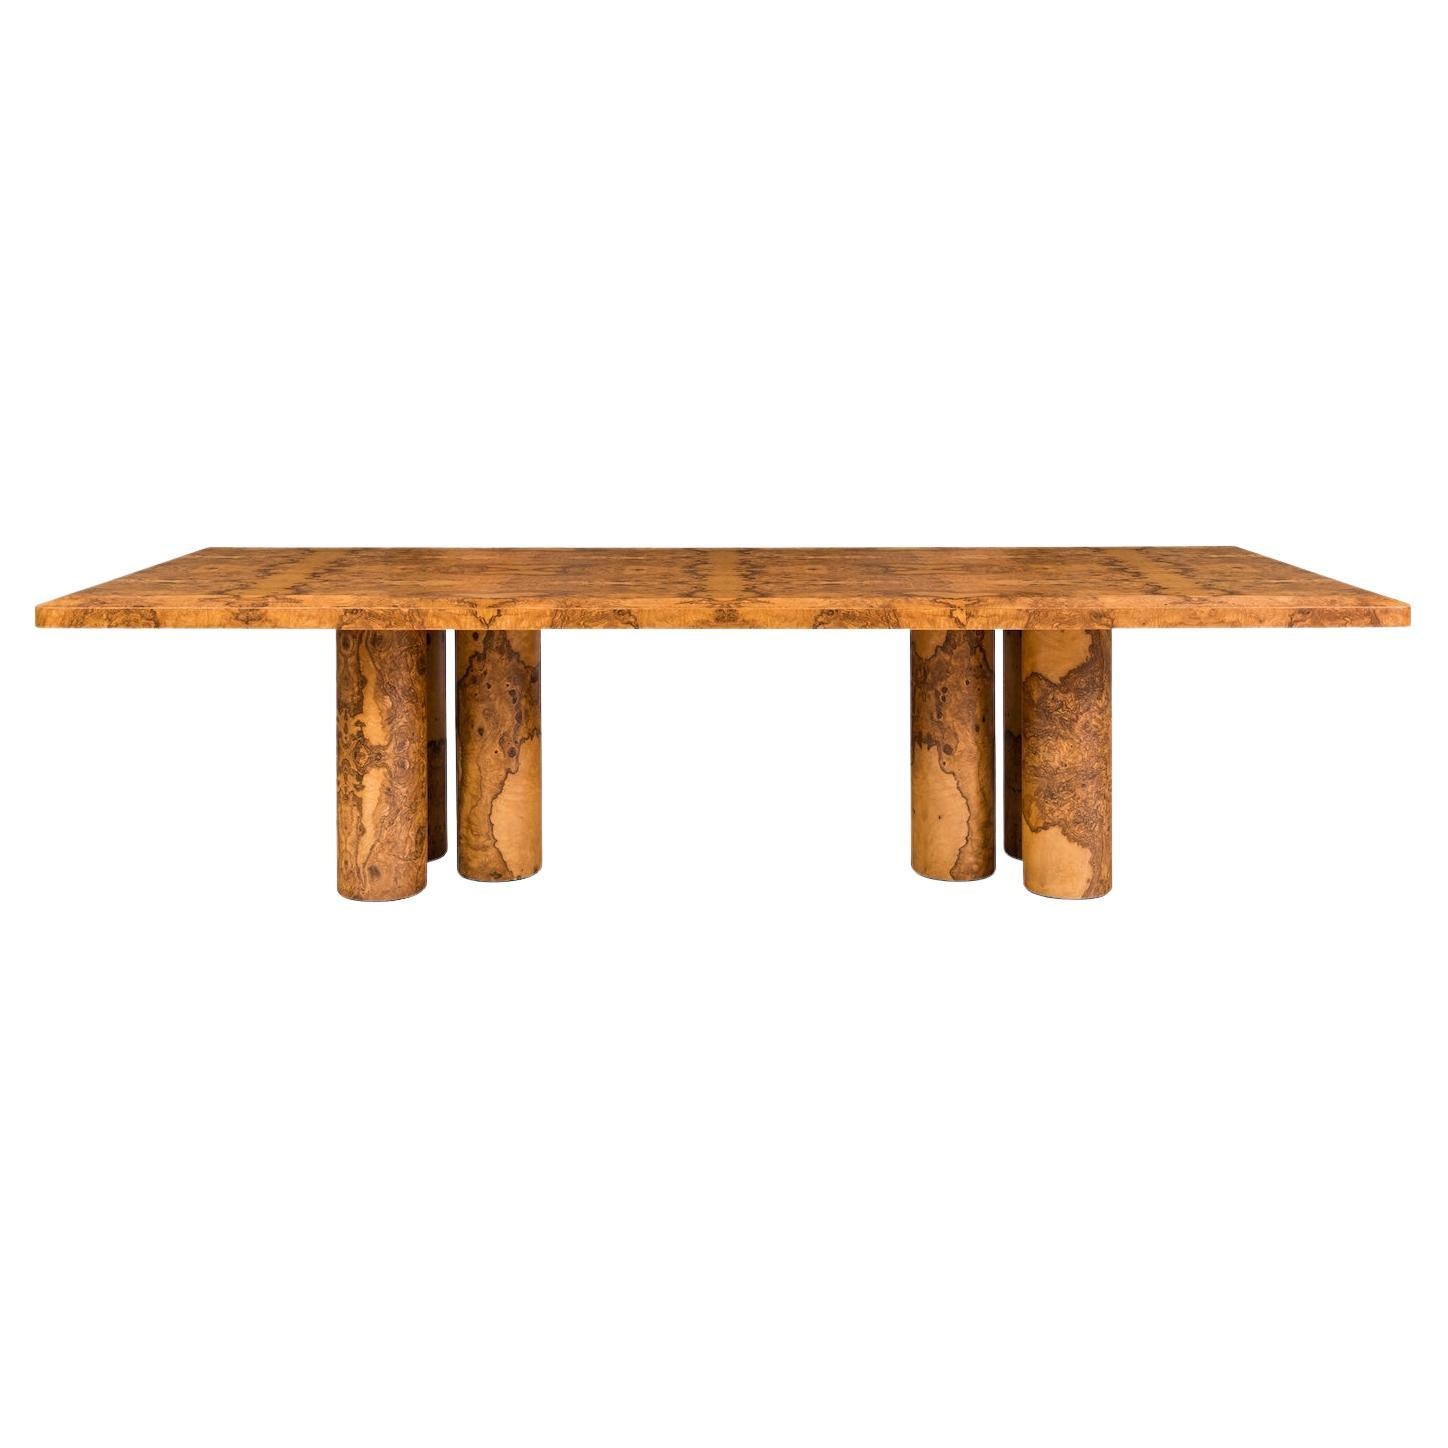 Sanayi313 Table by Sanayi 313 For Sale